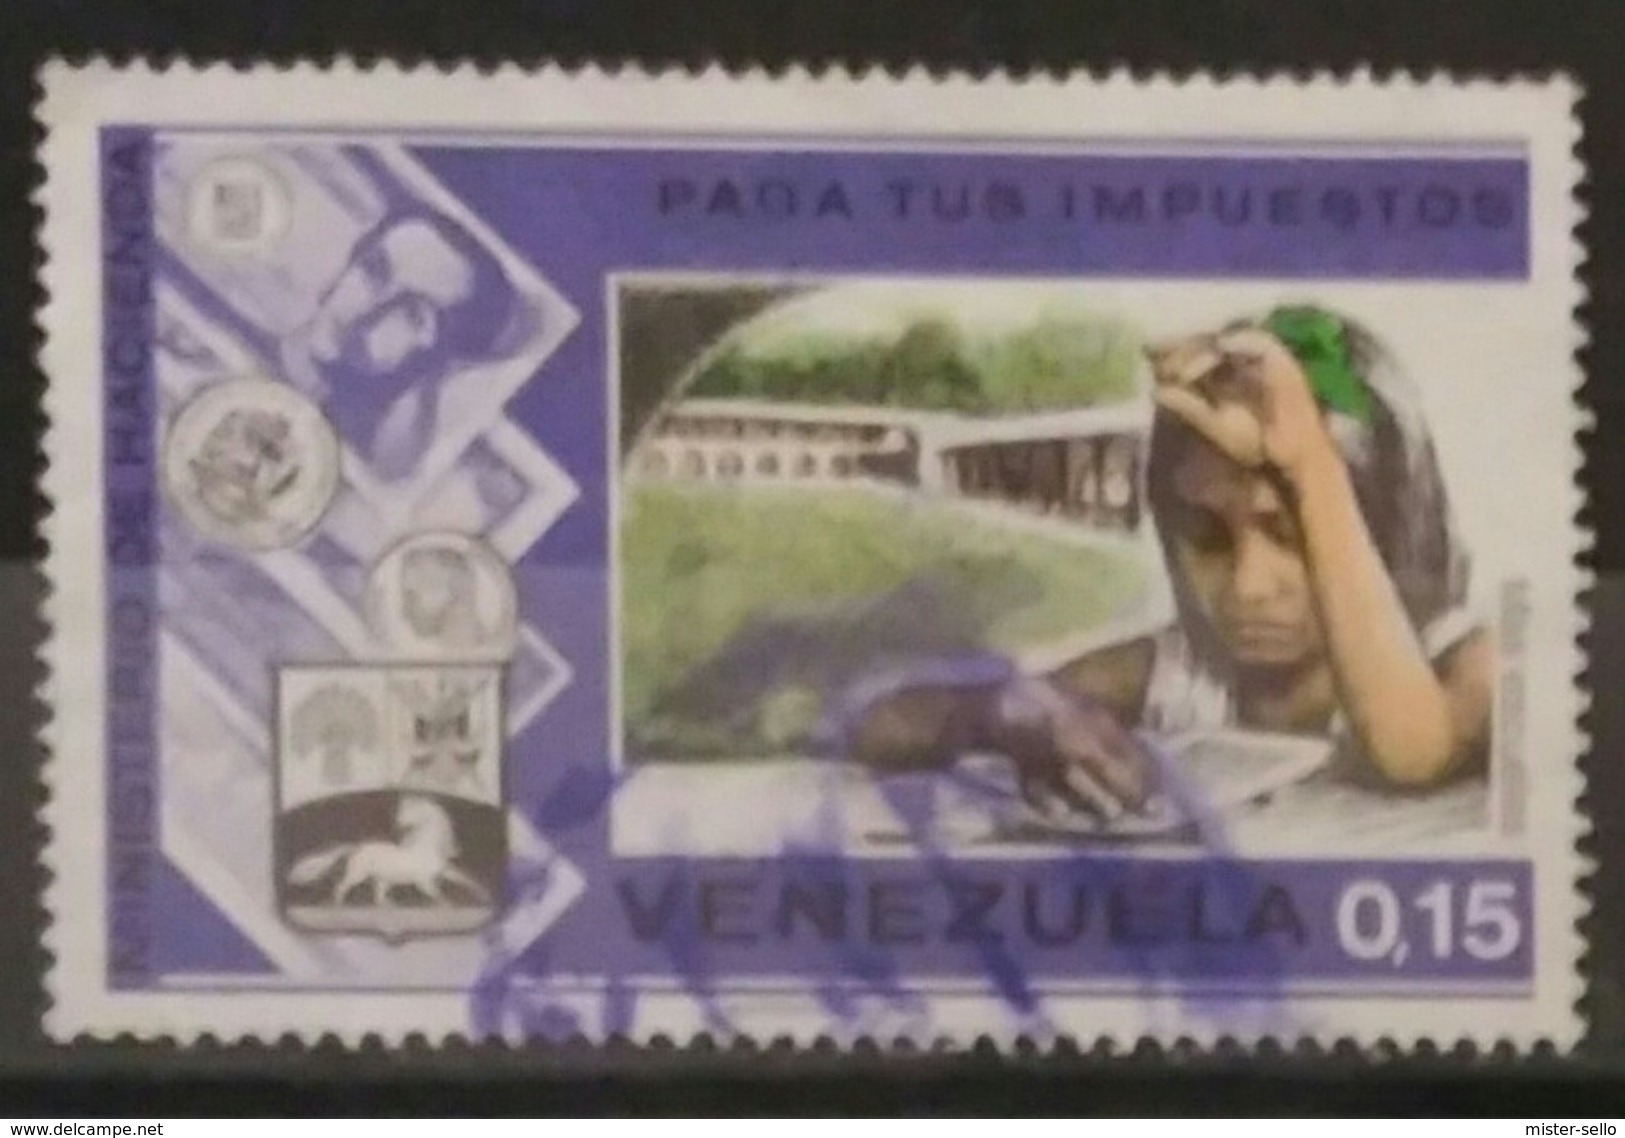 VENEZUELA 1974 "Pay Your Taxes" Campaign. USADO - USED. - Venezuela